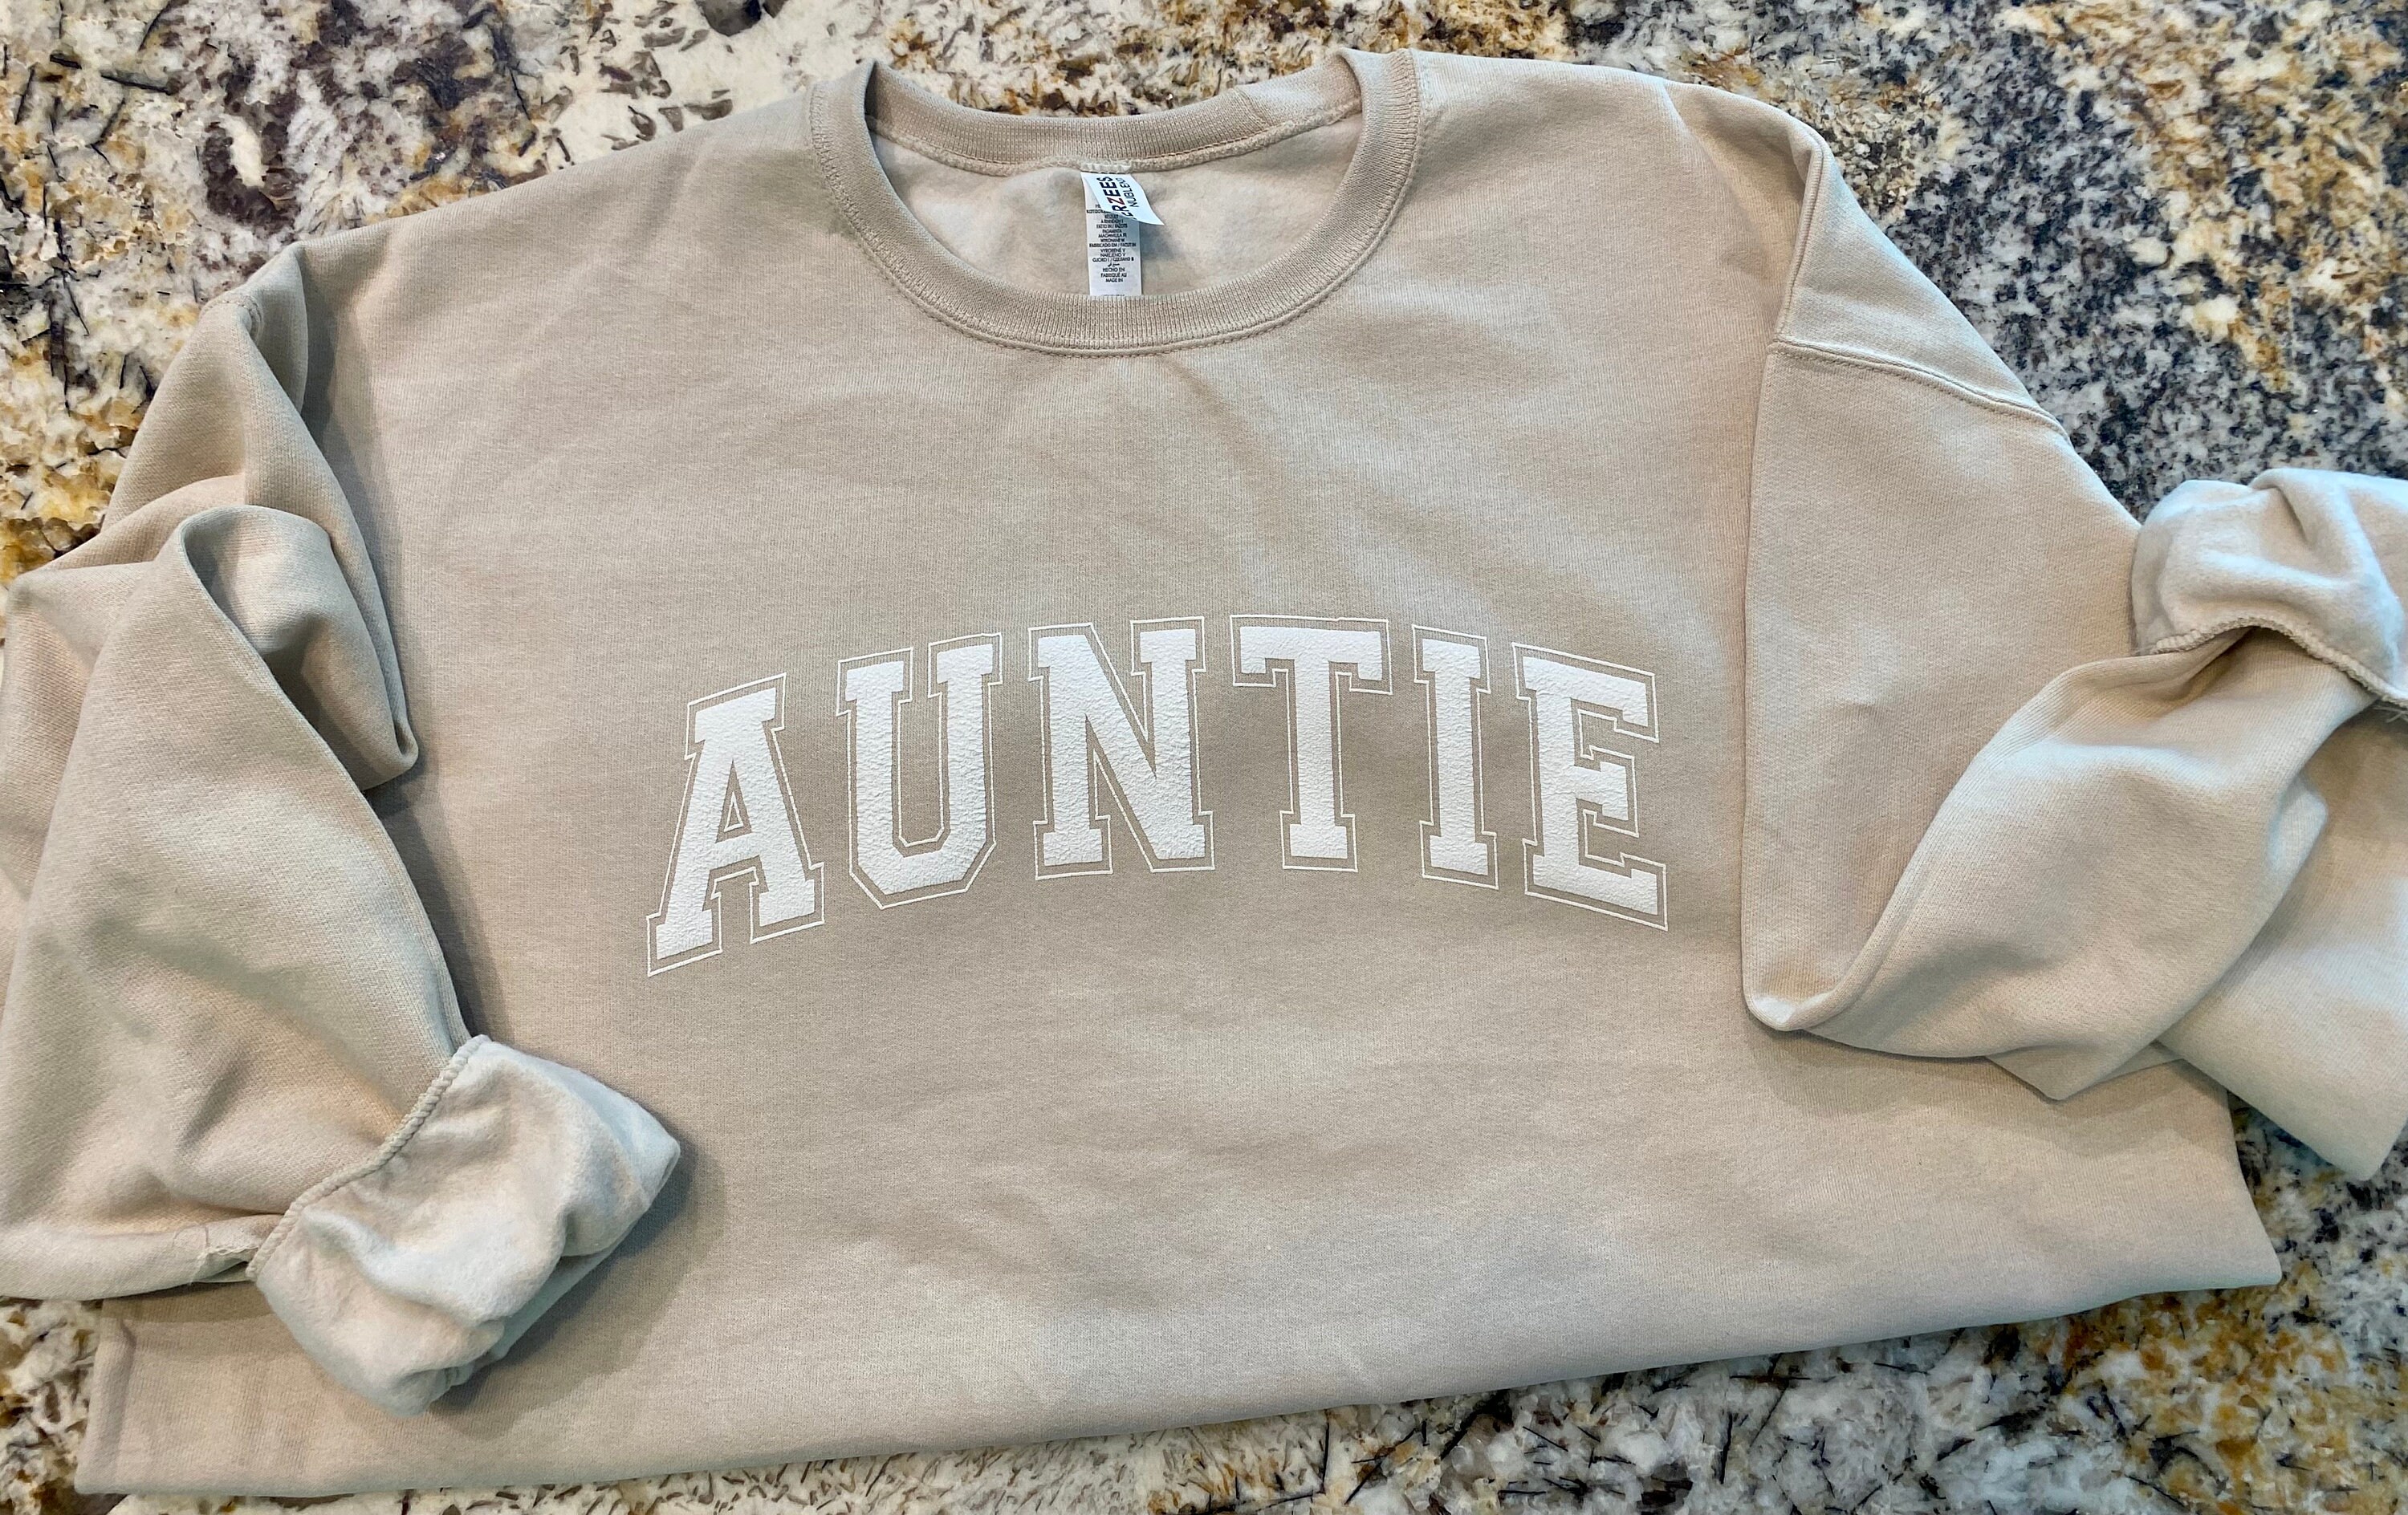 Auntie PUFF VINYL Crew Sweatshirt – Market on Maple